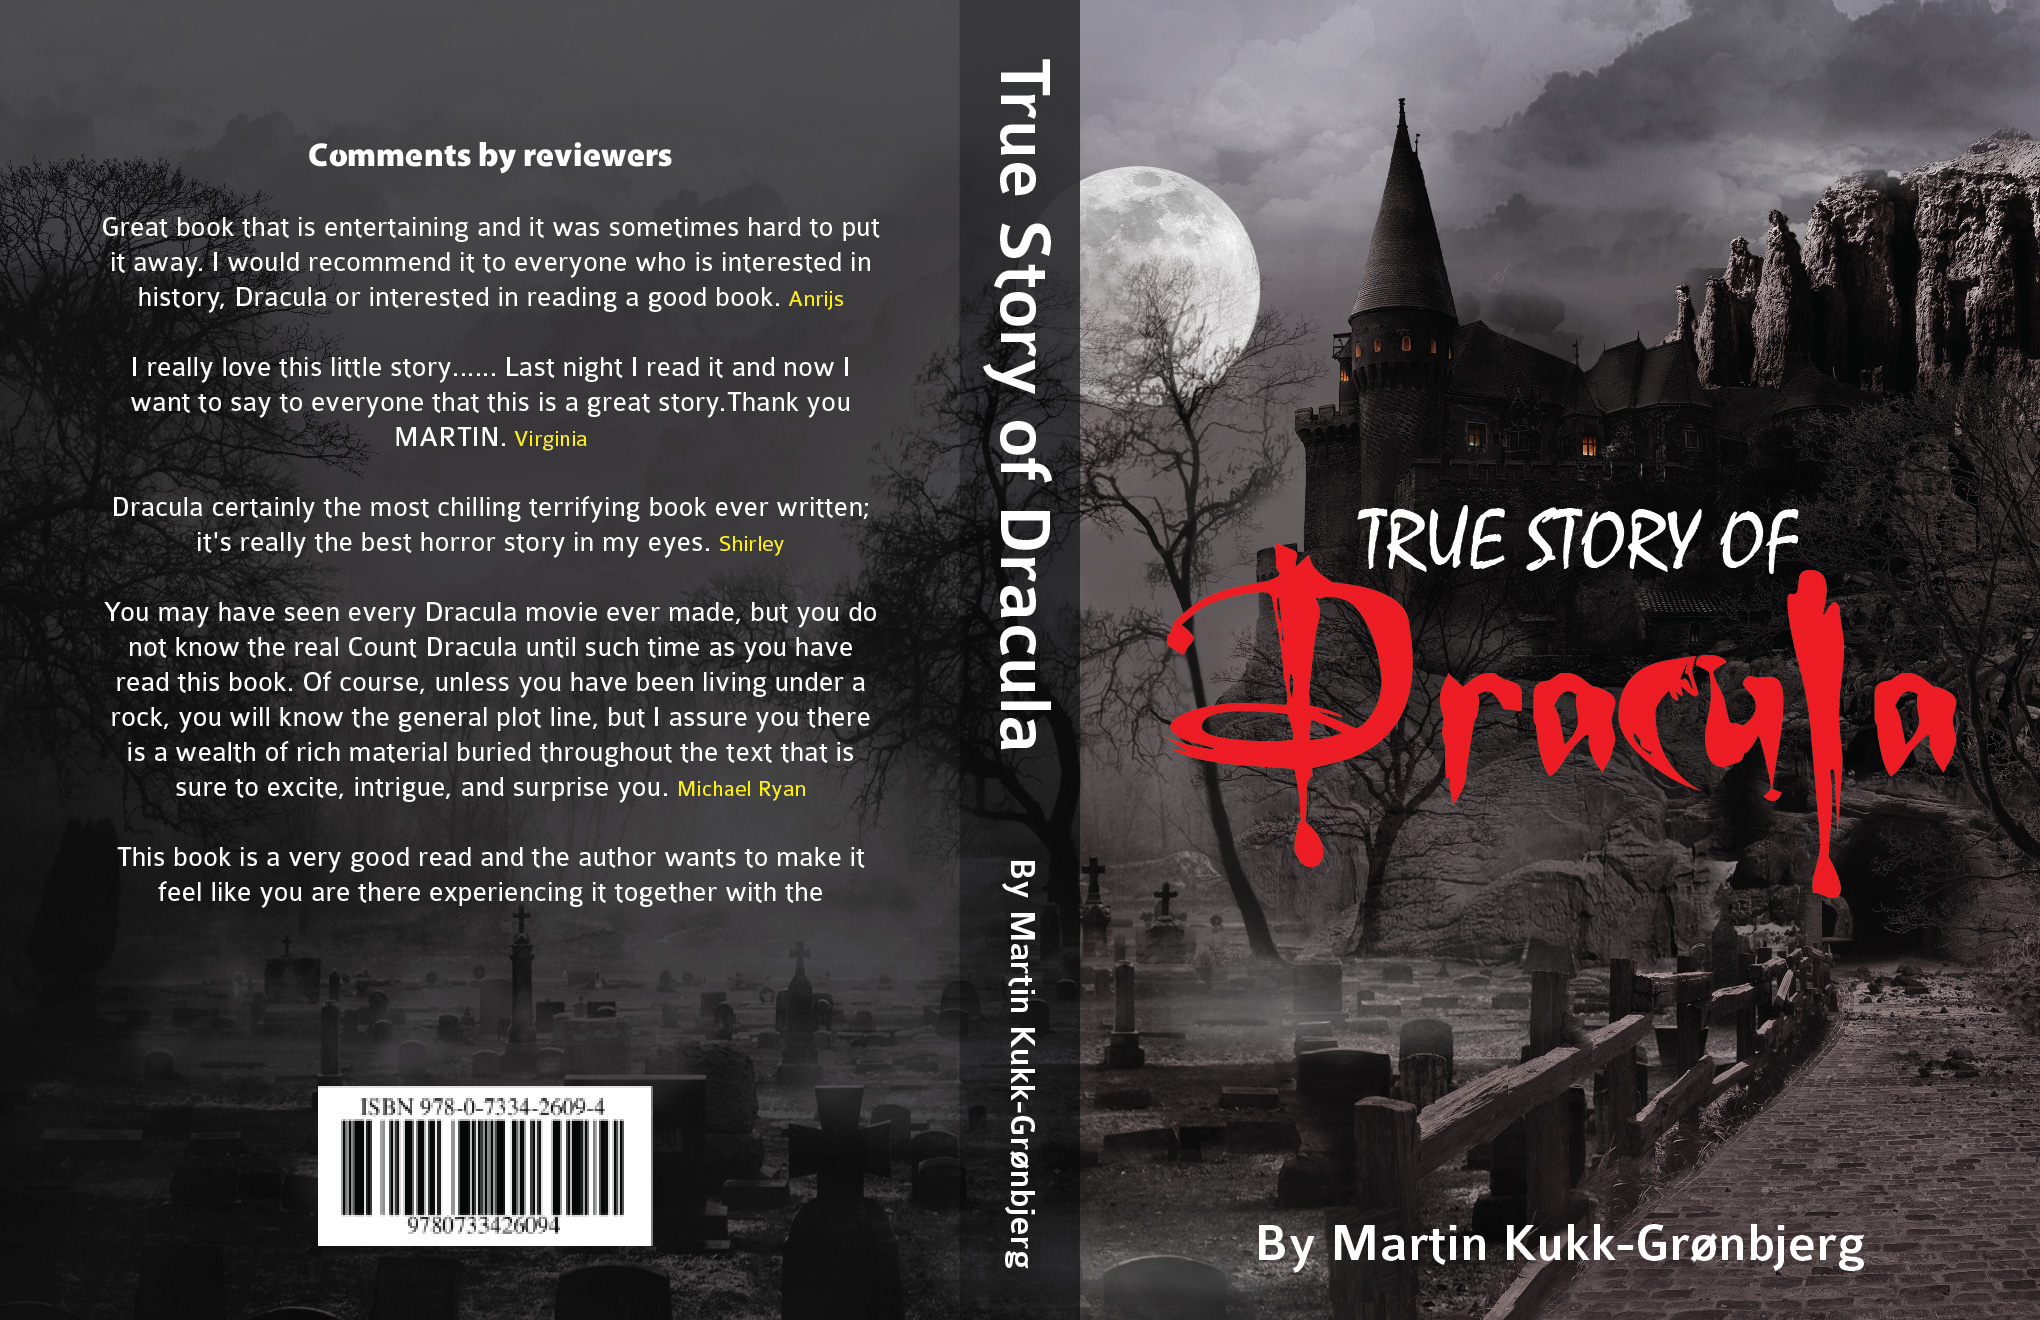 FREE: The True Story of Dracula by Martin Kukk-Grønbjerg